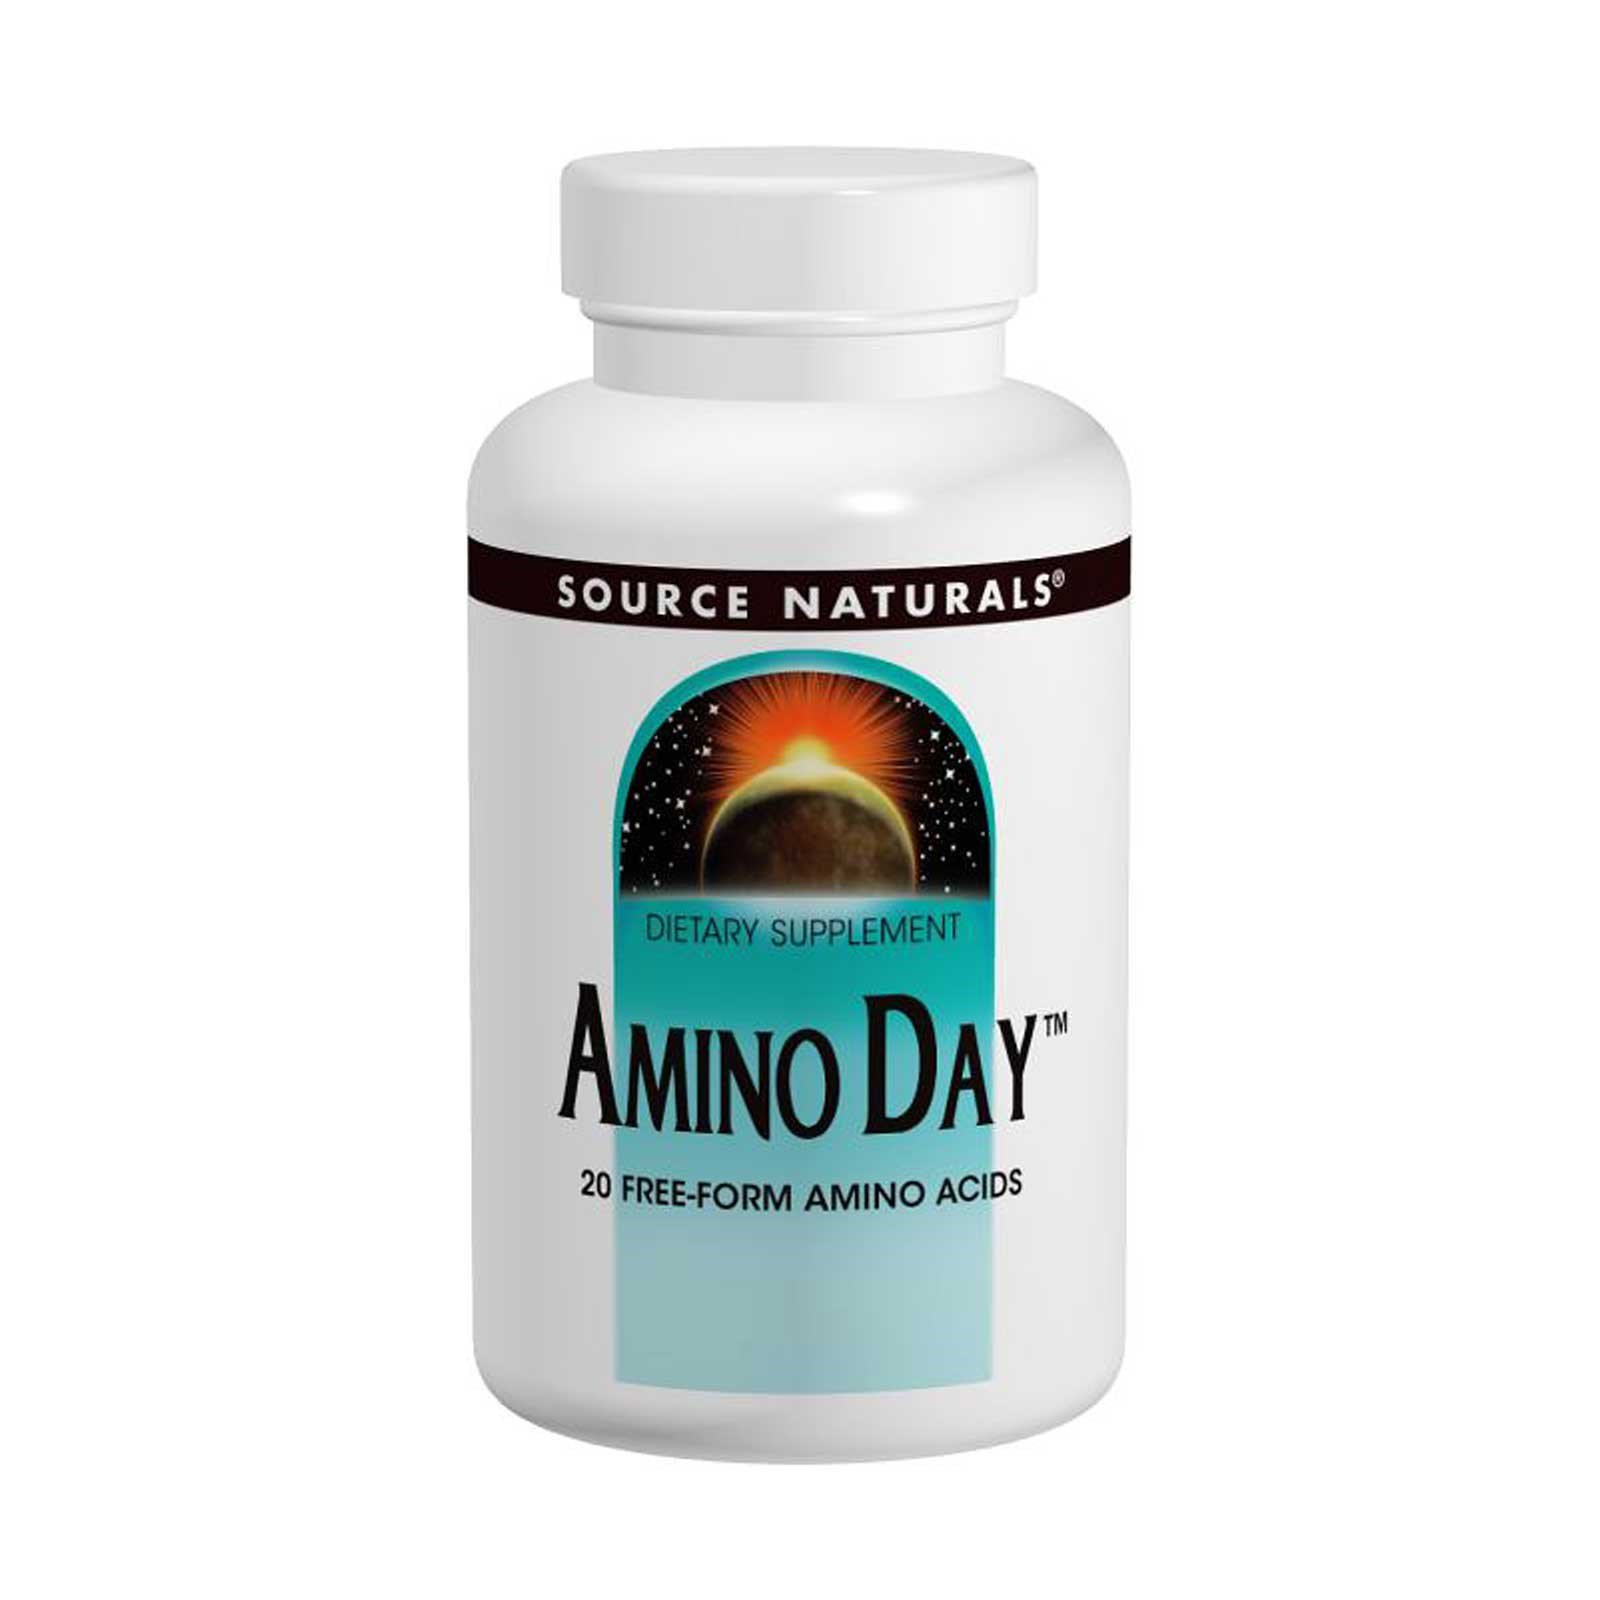 Source Naturals, Amino Day, 1,000 мг, 120 таблеток